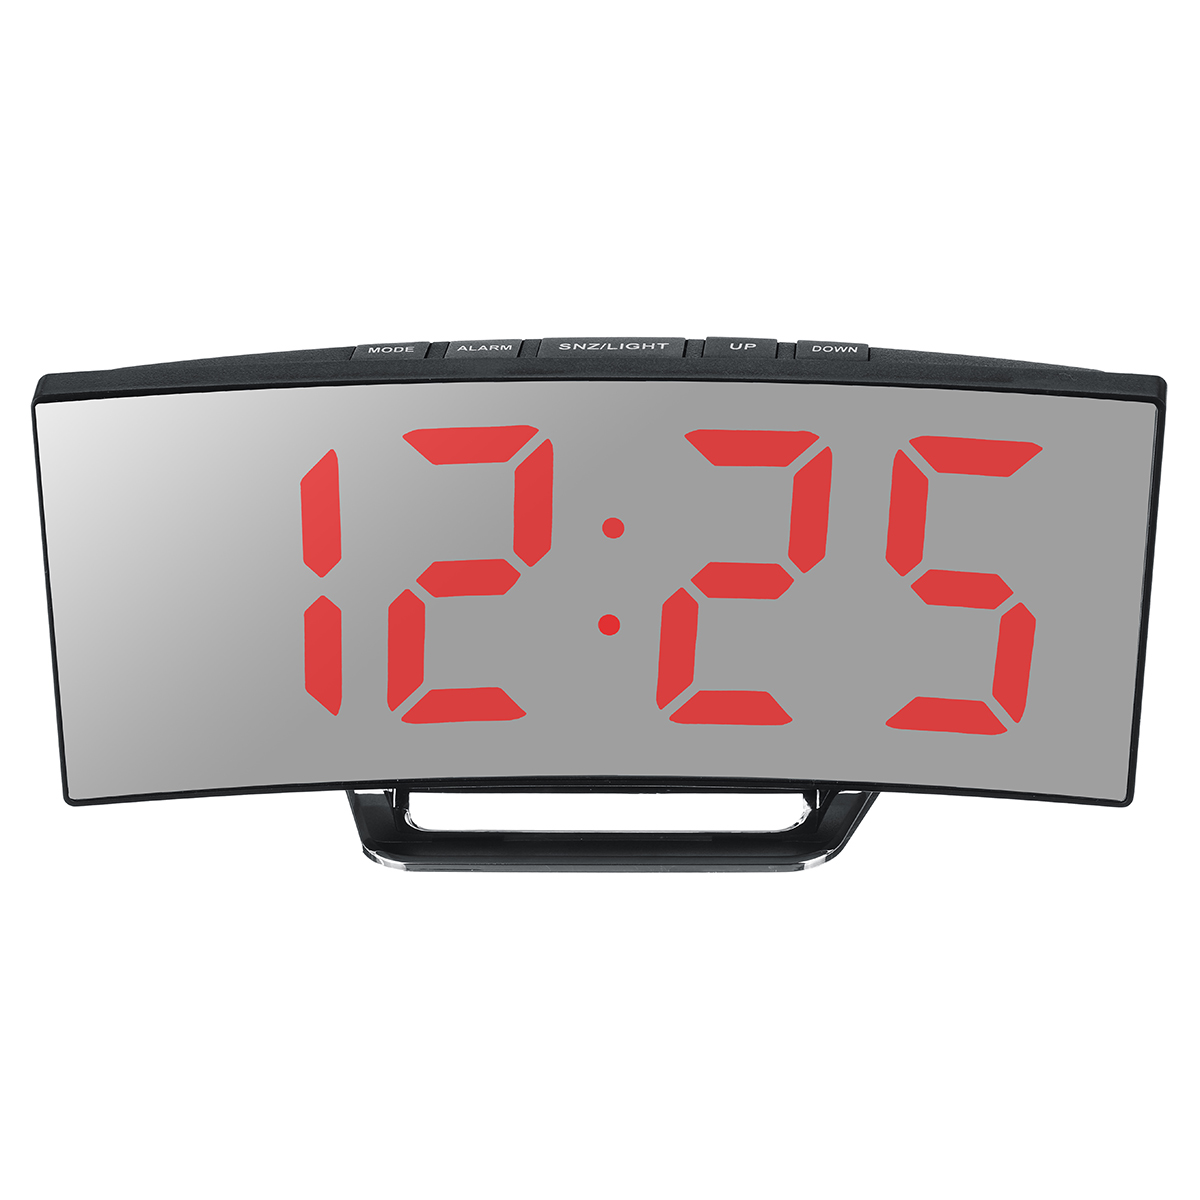 Curved-LED-Digital-Alarm-Clock-Mirror-Table-Display-Temperature-Snooze-USB-Room-1639017-7